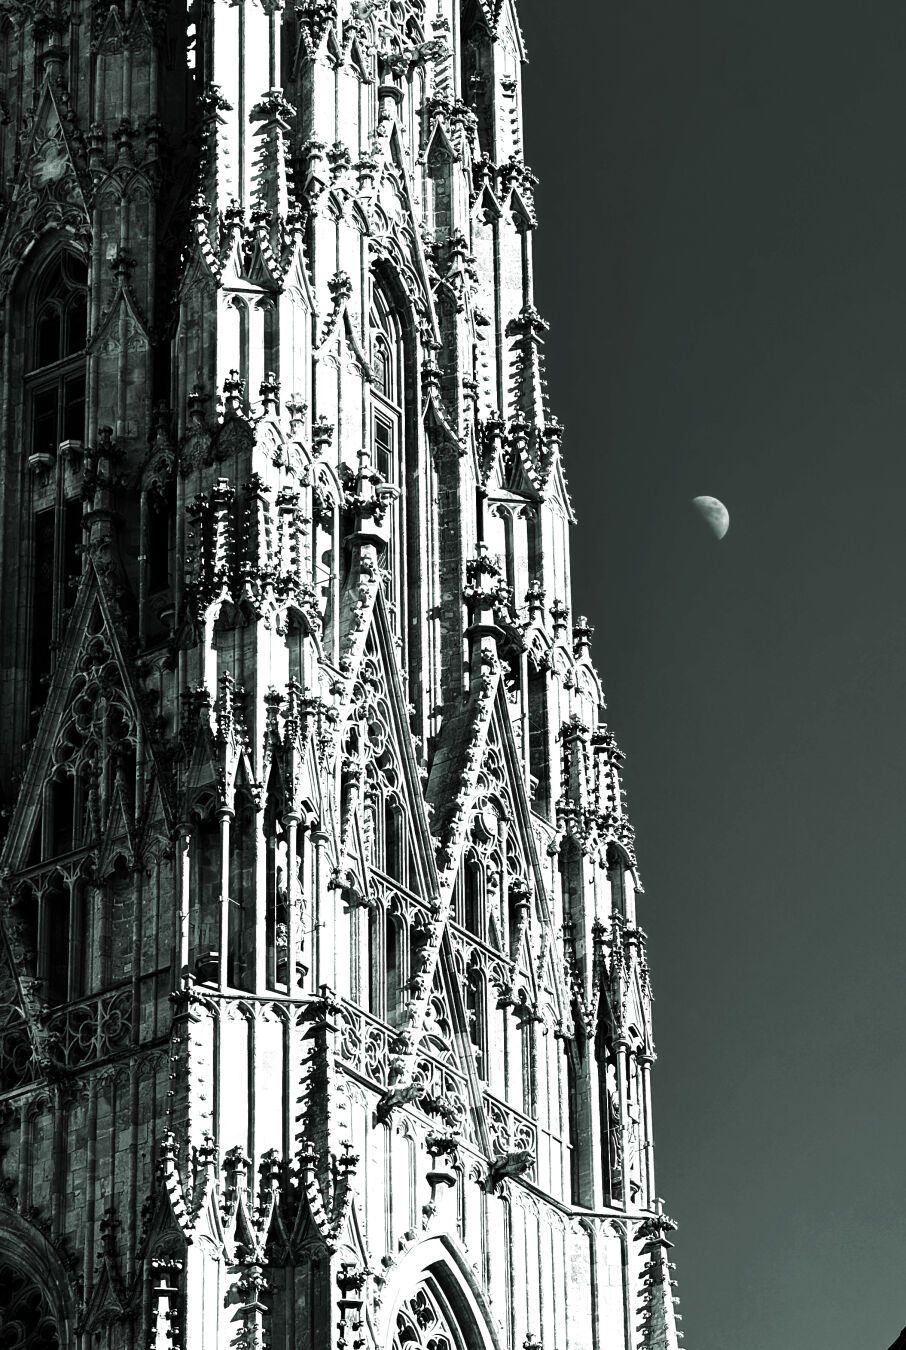 Spaceship? 

(No, Vienna cathedral 😀)

#austria #vienna #viennacathedral #architecture #gothic #moon #blackandwhitephotography #photography #smartphonephotography